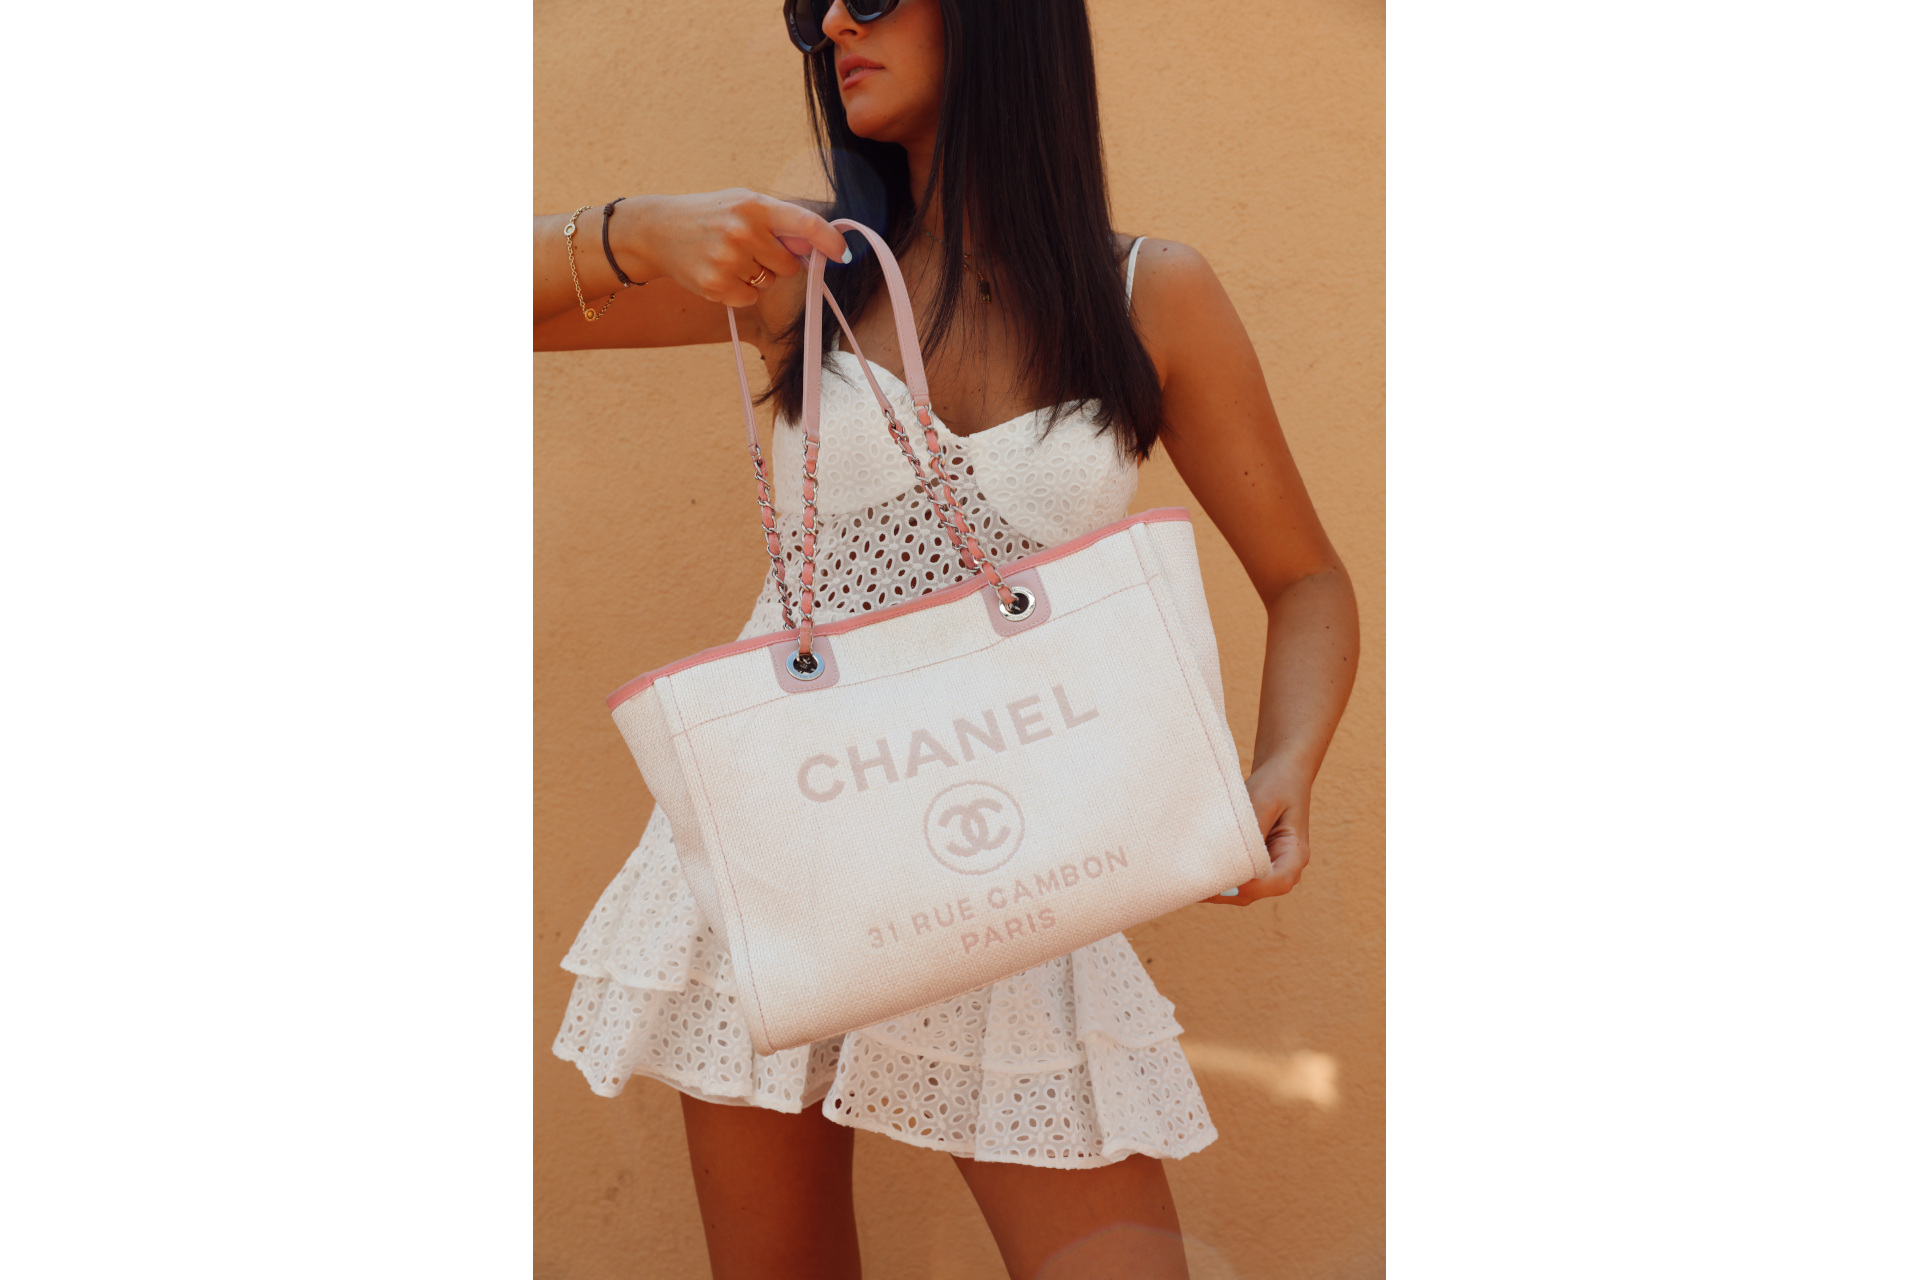 Woman carrying Chanel handbag